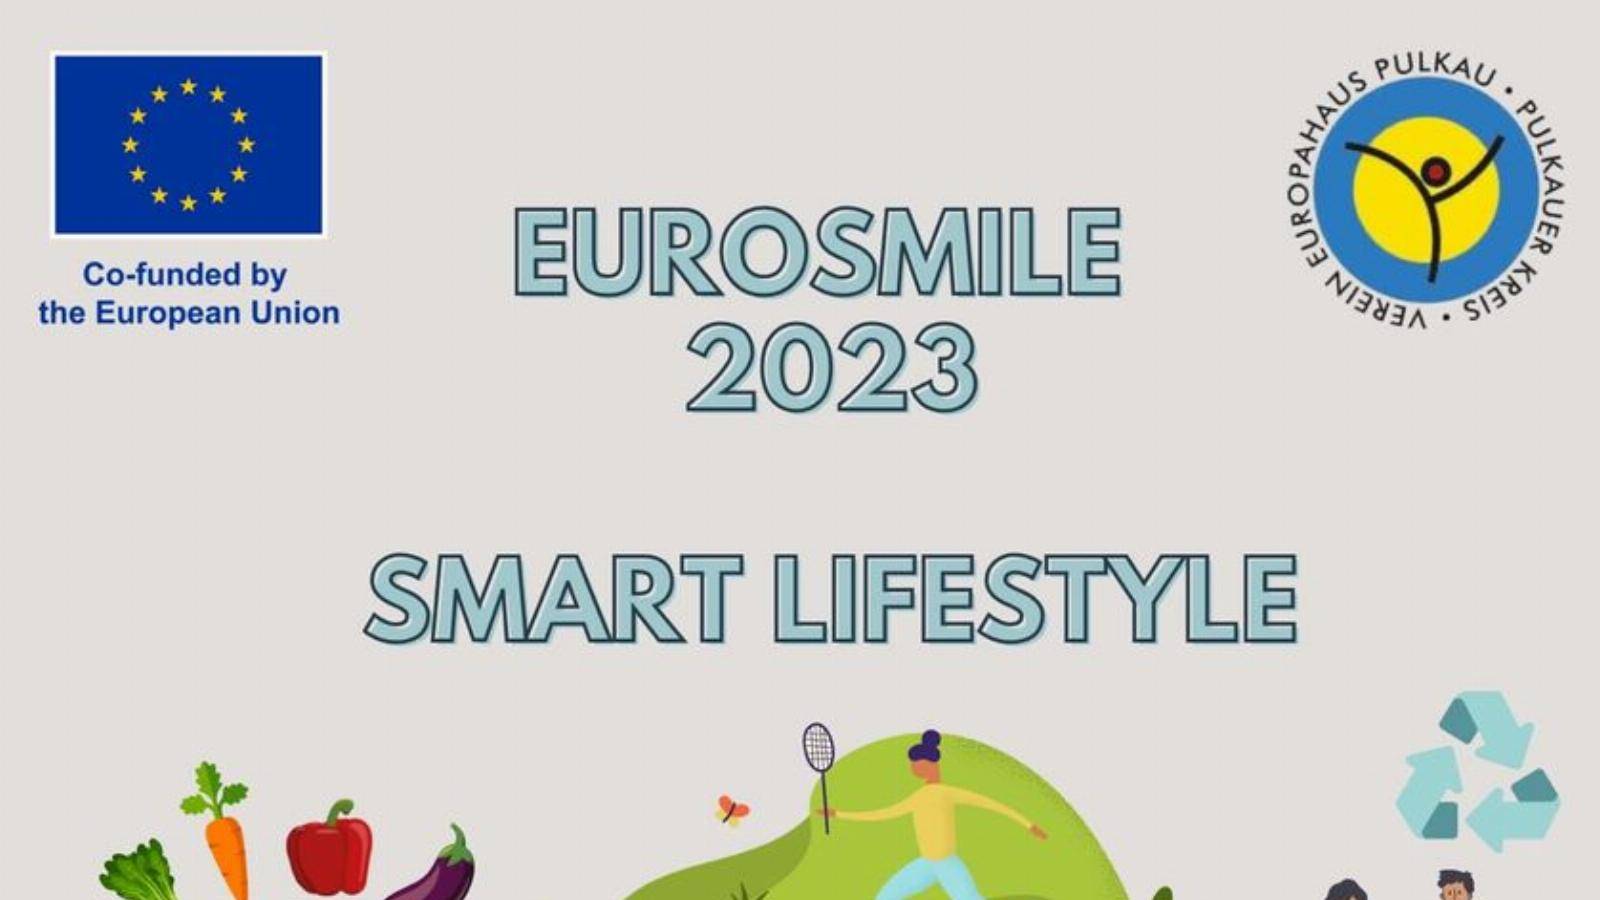 Opět se účastníme! - Eurosmile PULKAU 2023